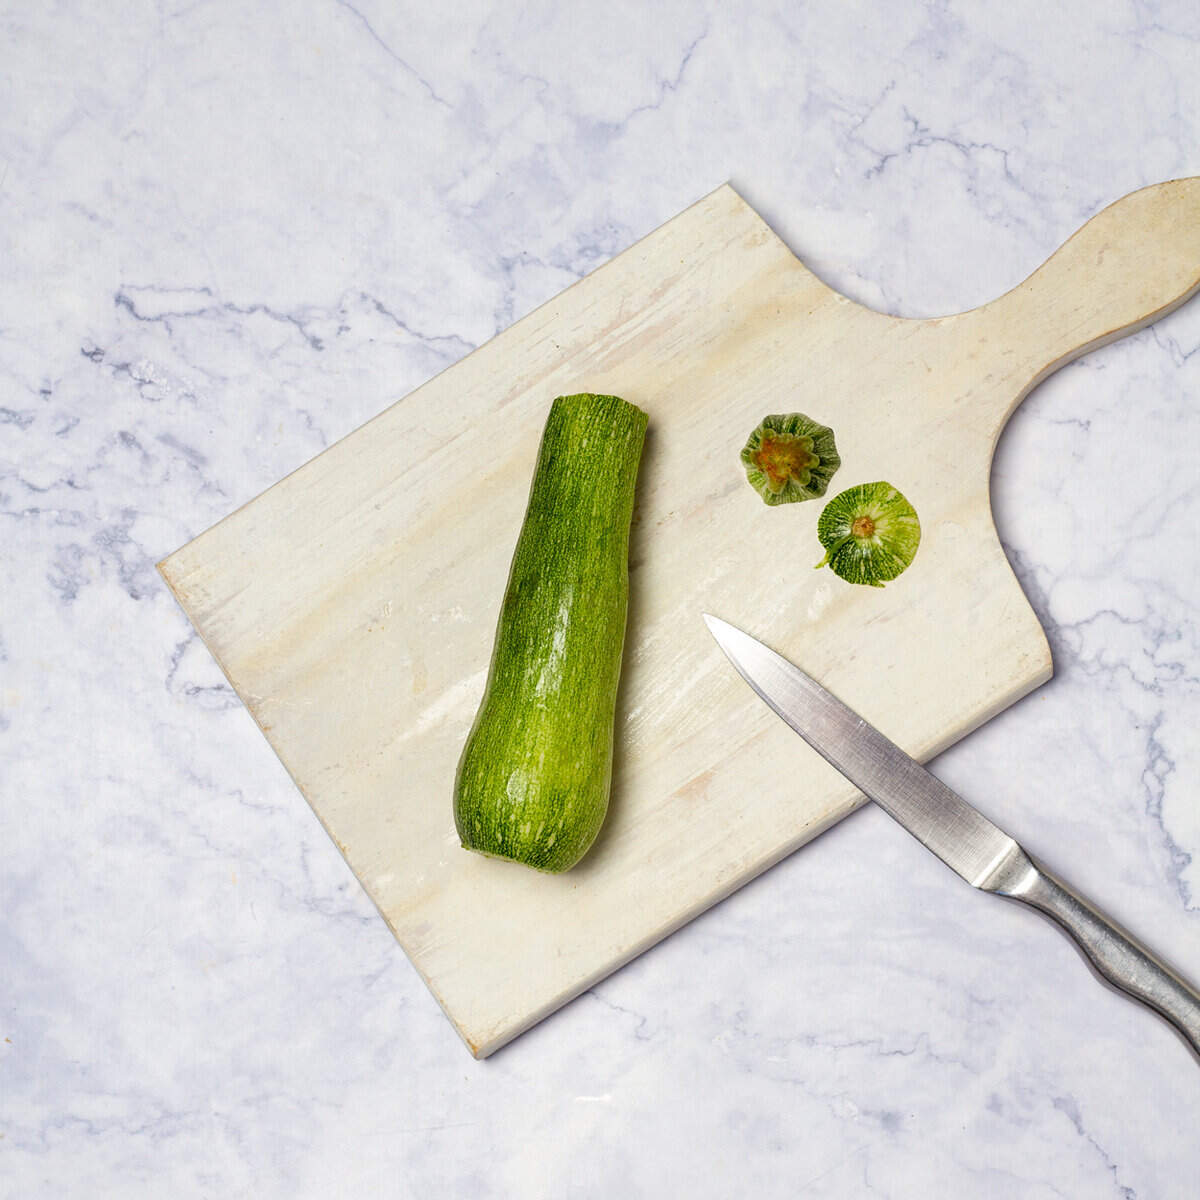 Zucchinis stem cut off on chopping board